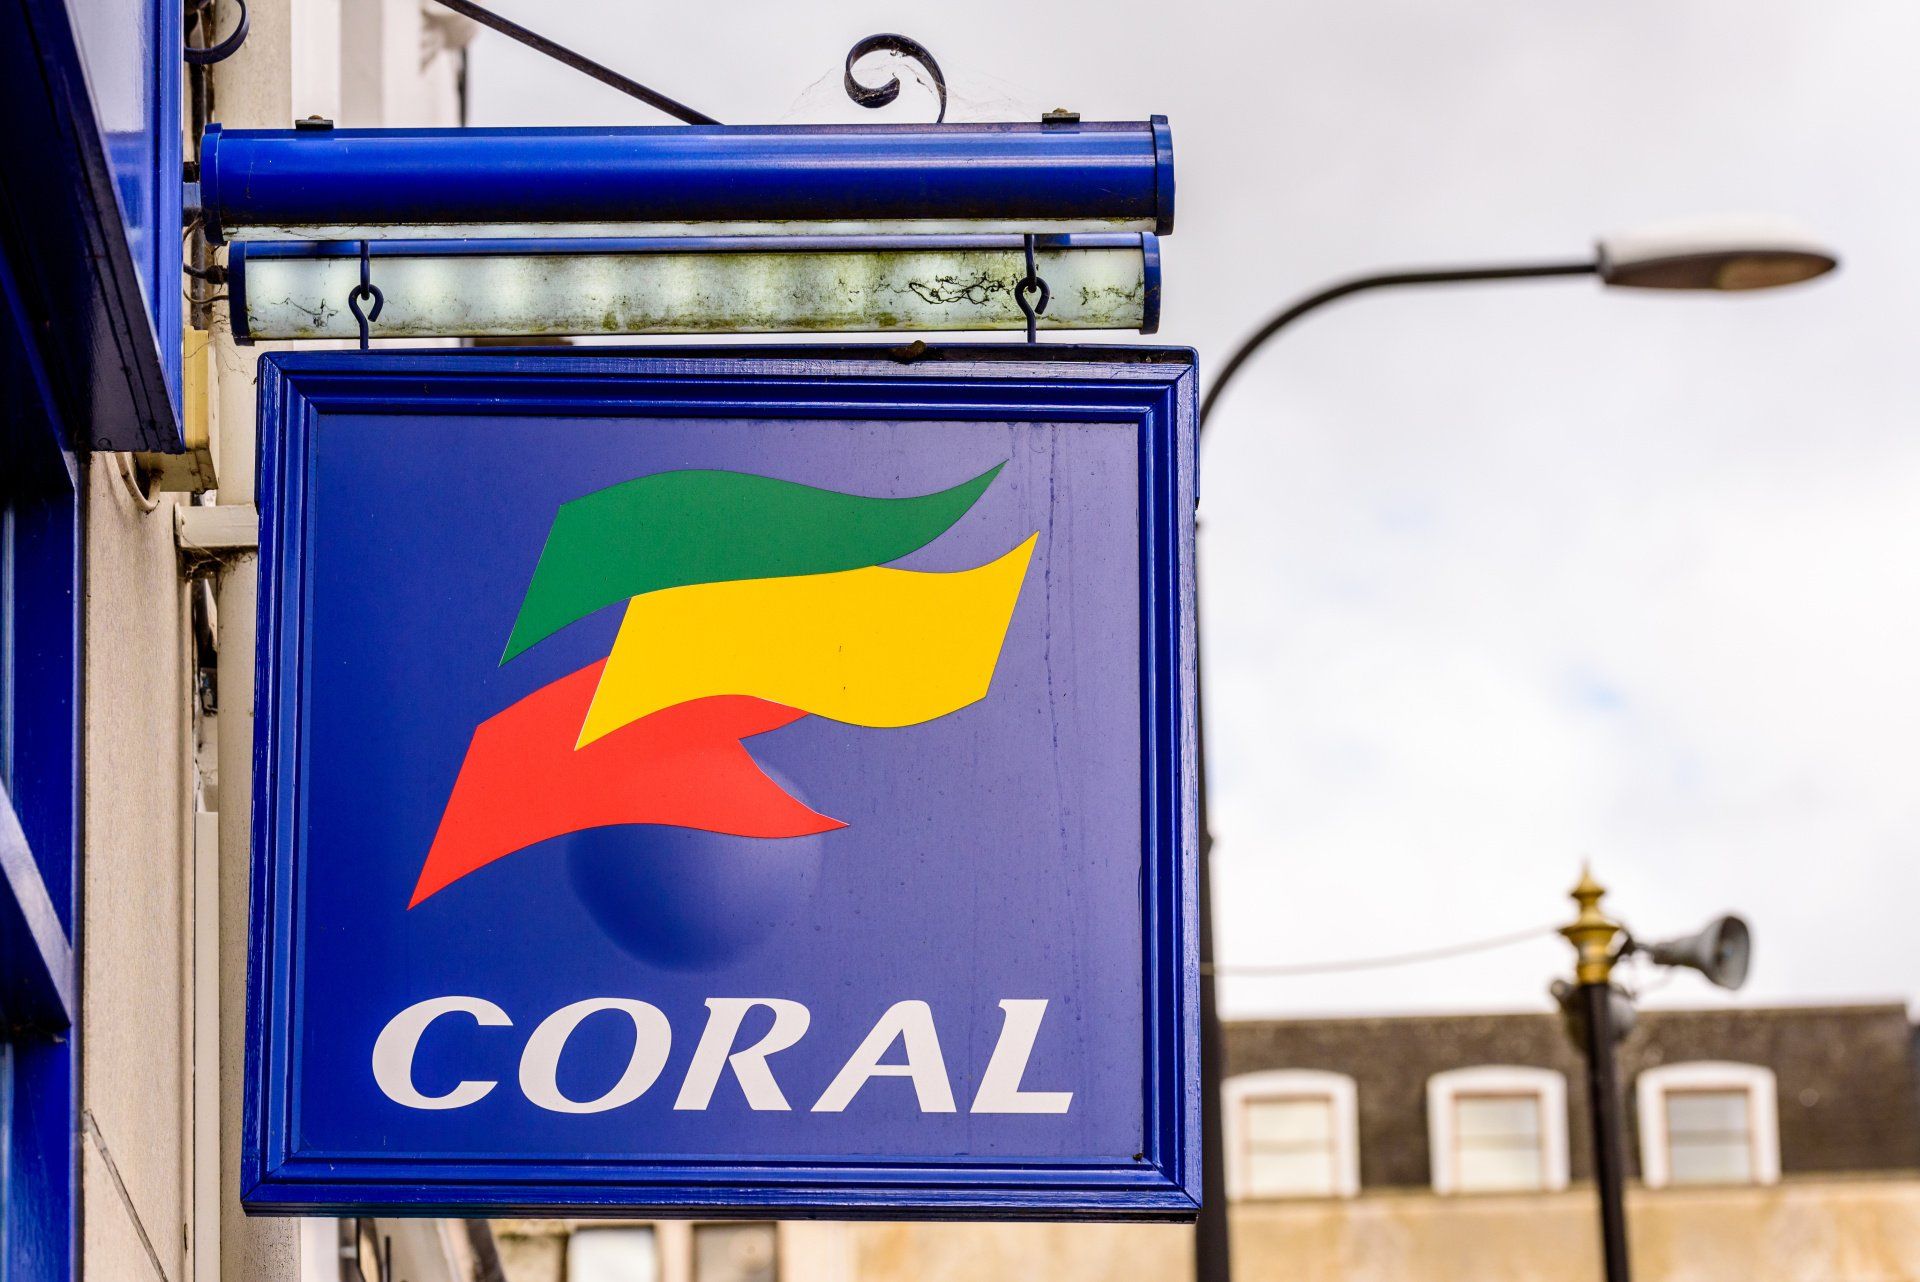 Coral logo on signage